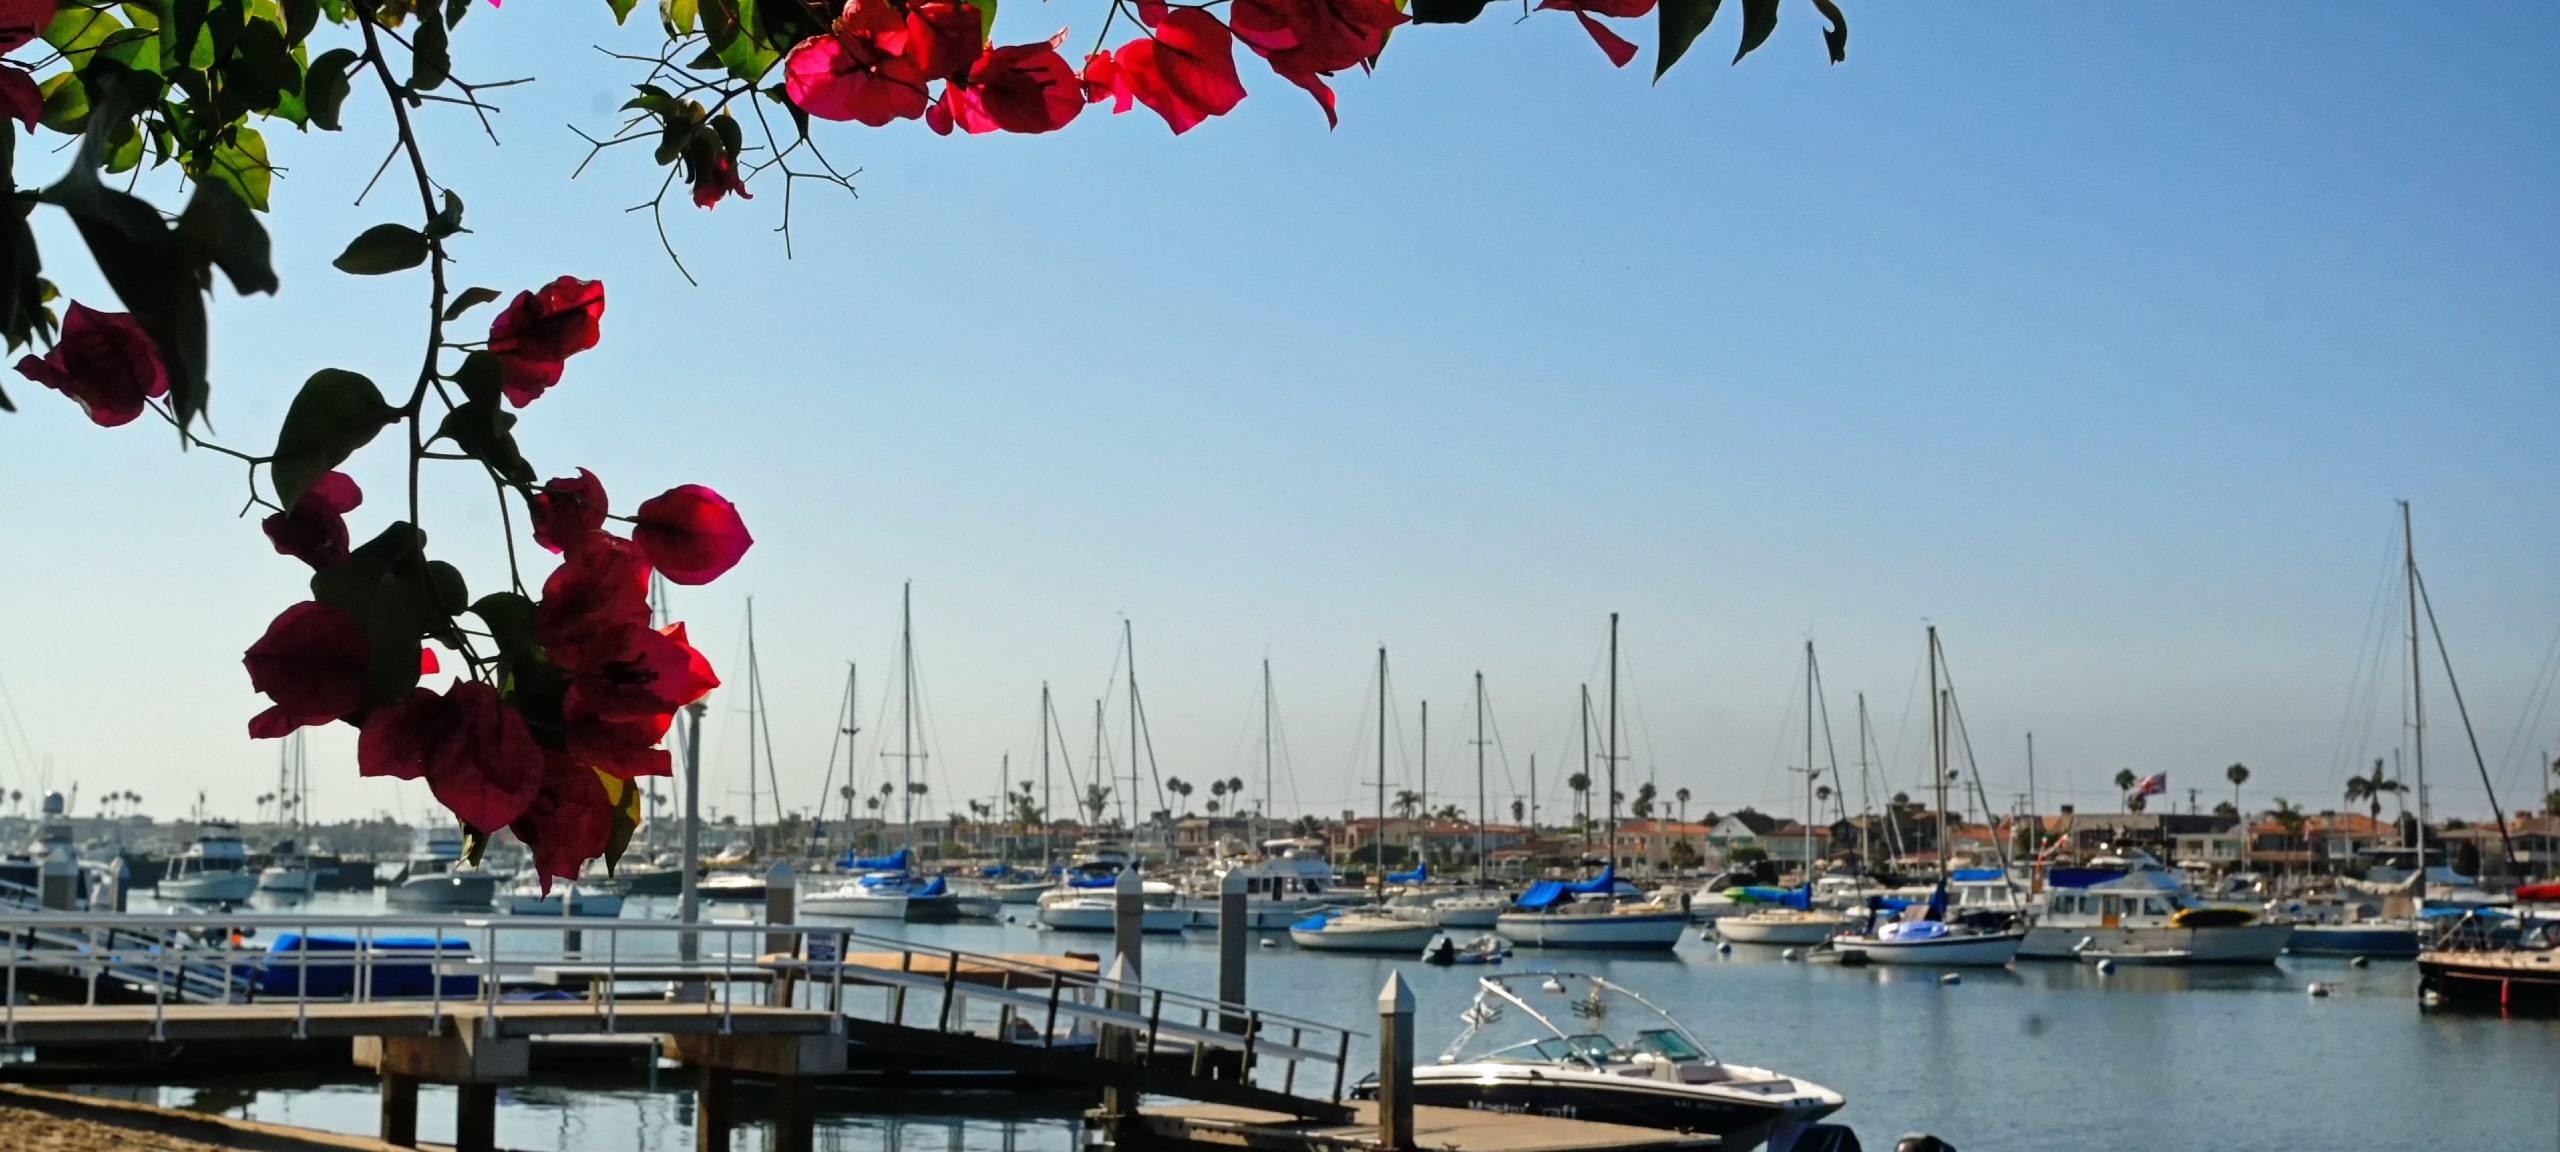 Flowers over marina at Newport Beach, CA